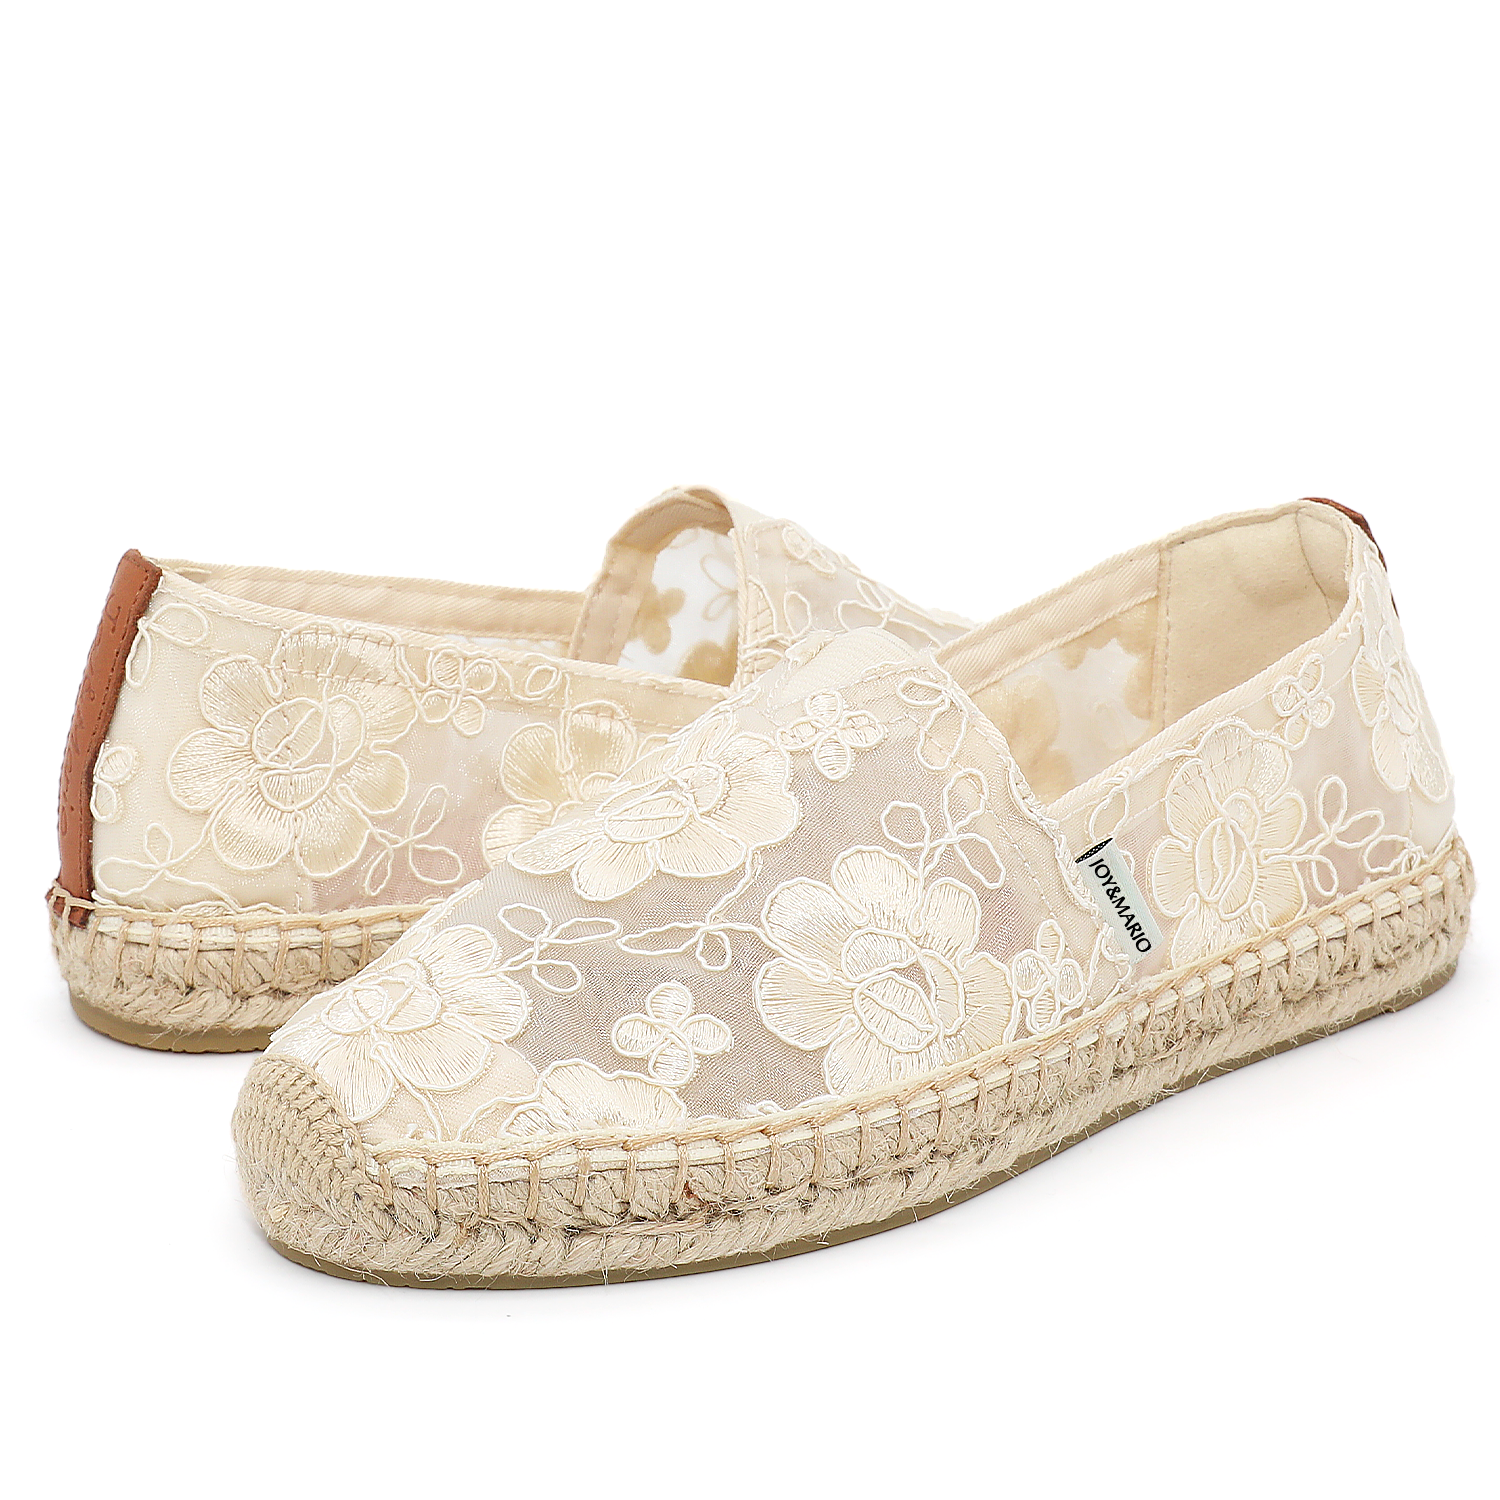 JOY&MARIO Handmade Women’s Slip-On Espadrille Mesh Loafers Flats in Beige-A01129W JOYANDMARIO